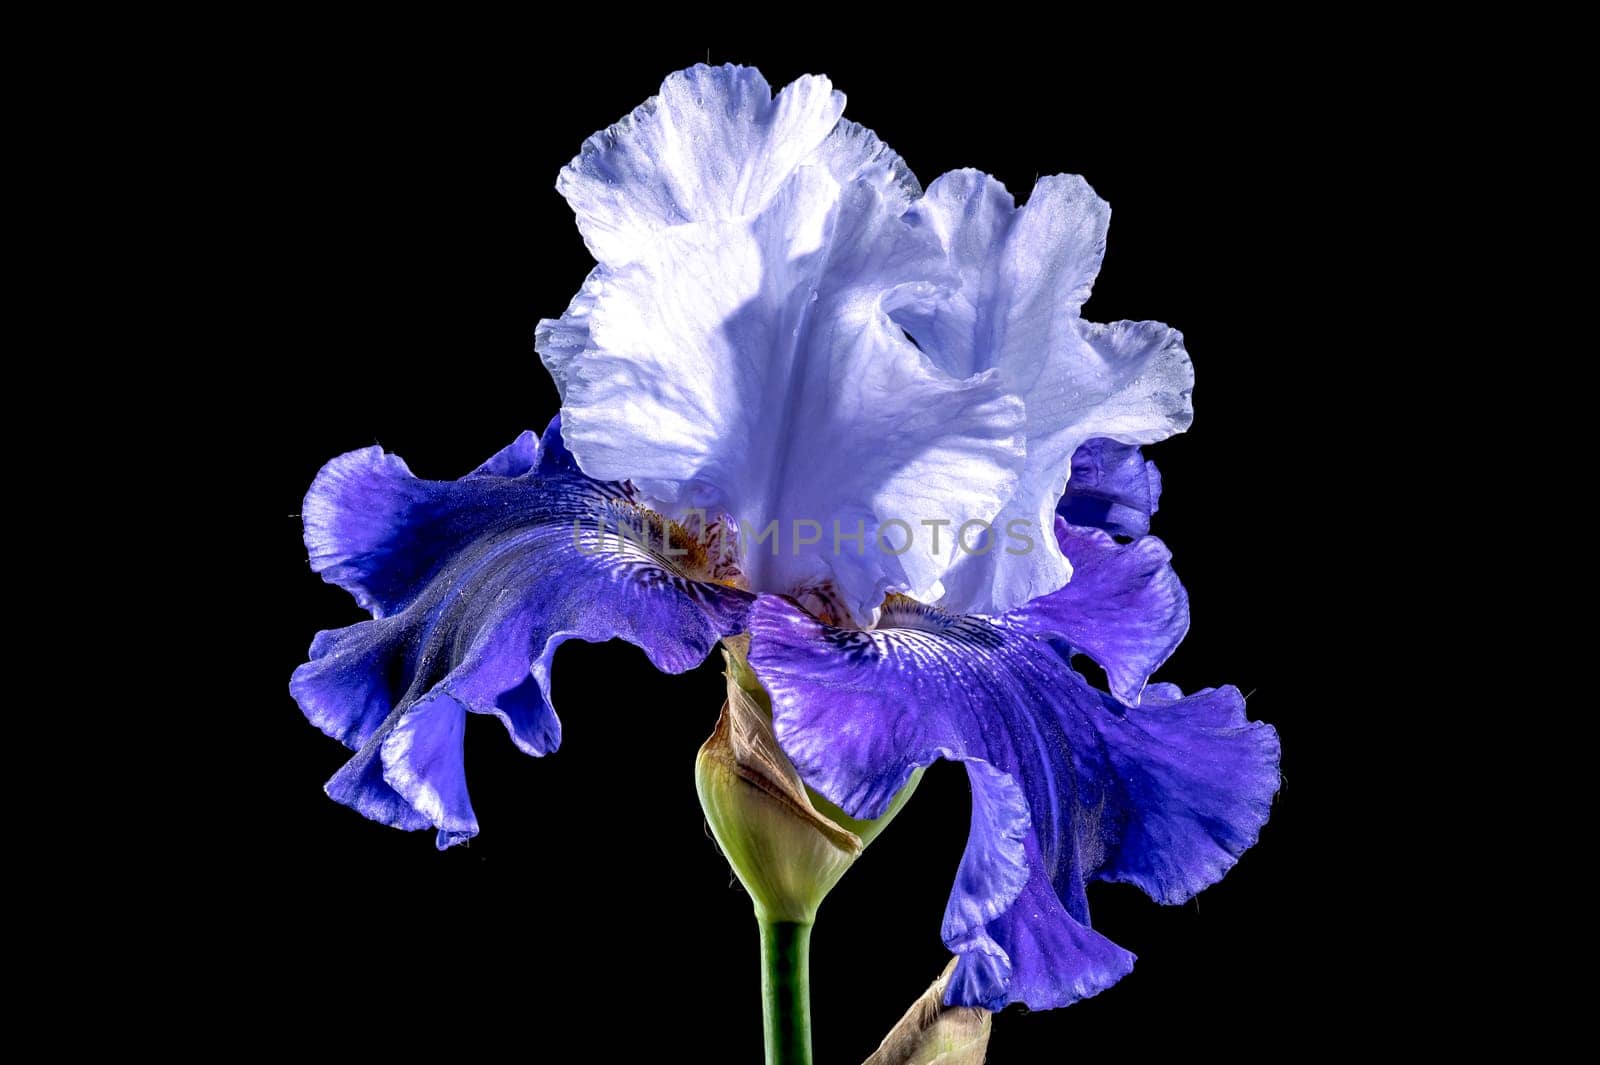 Blooming blue iris Mariposa Skies on a black background by Multipedia